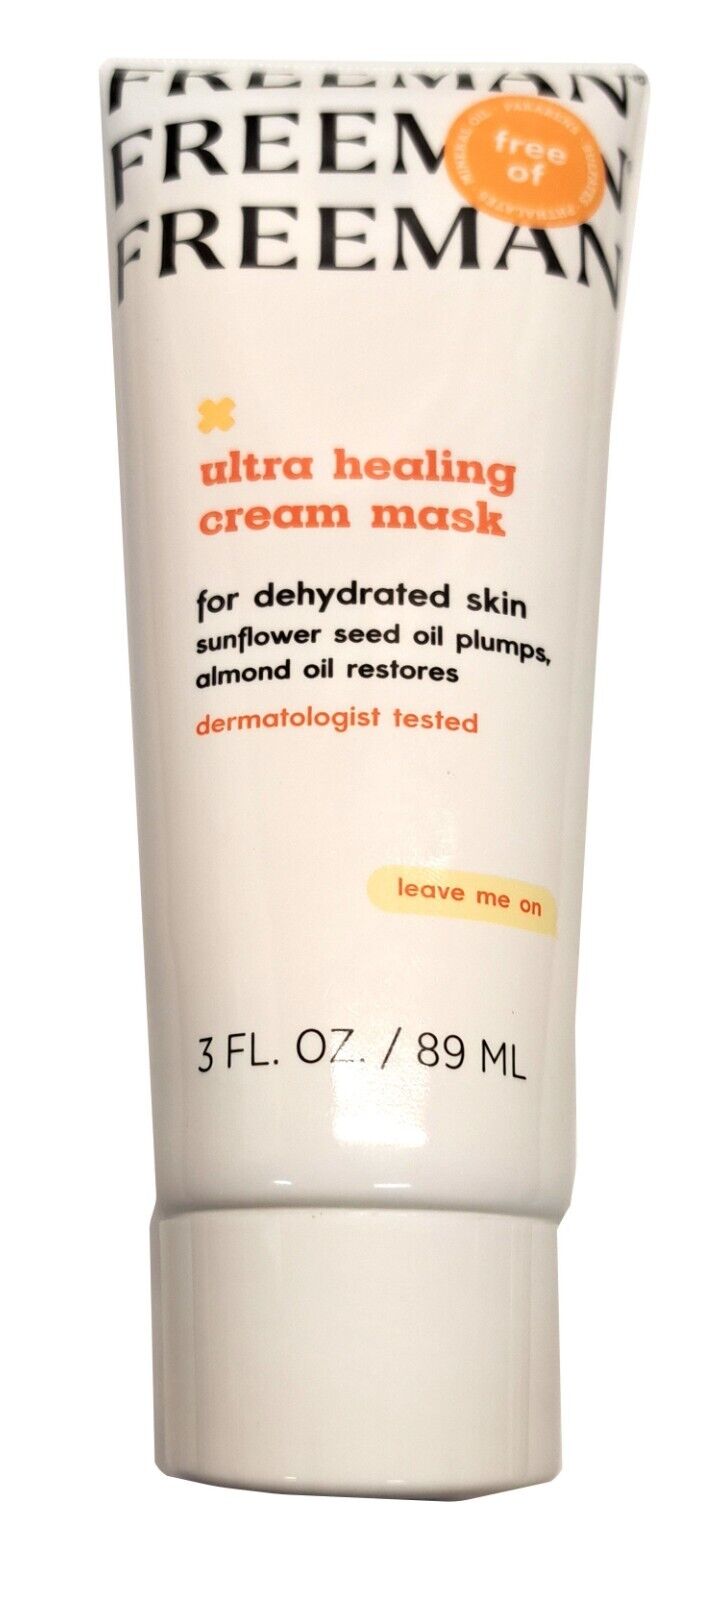 Freeman Ultra Healing Cream Mask for dehydrated skin 3fl oz, 89ml